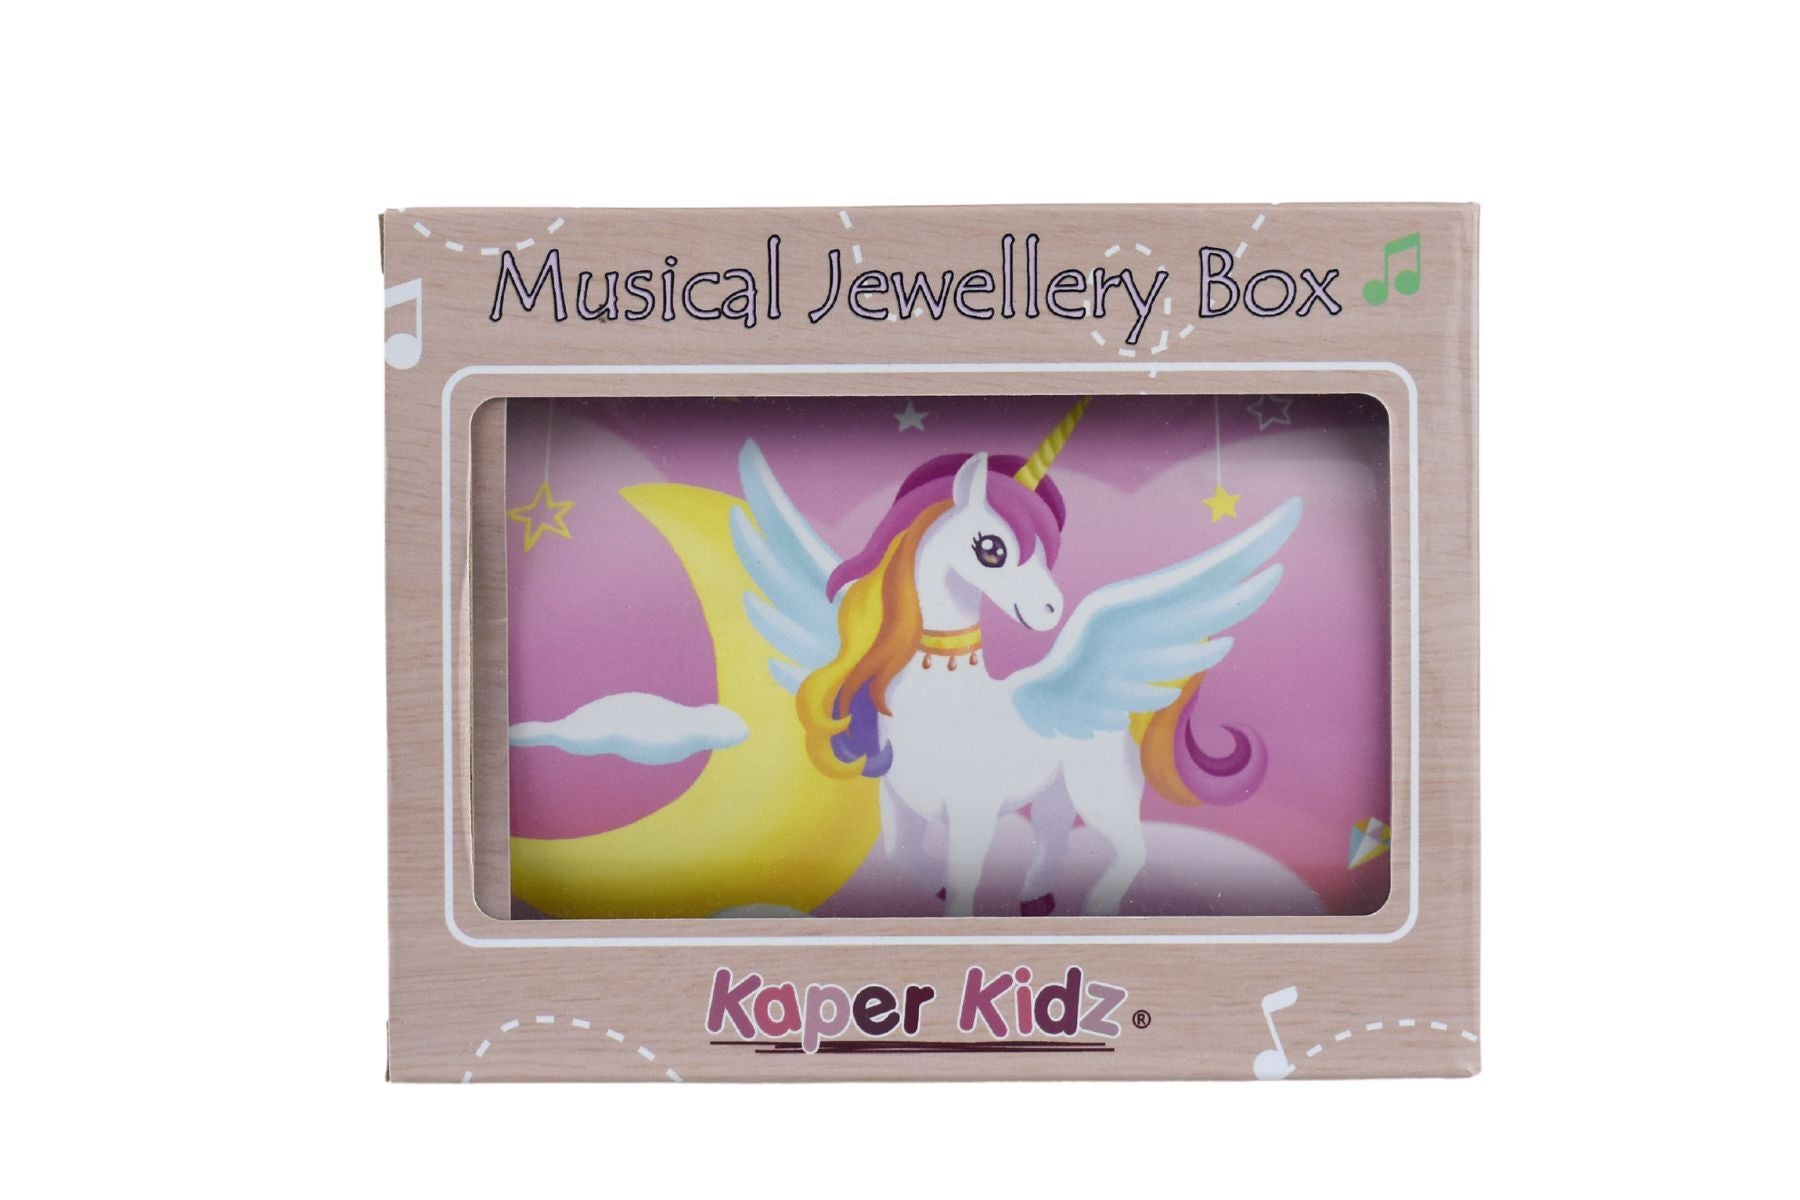 Packaging Image of Starlight Unicorn Dome Music Jewellery Box